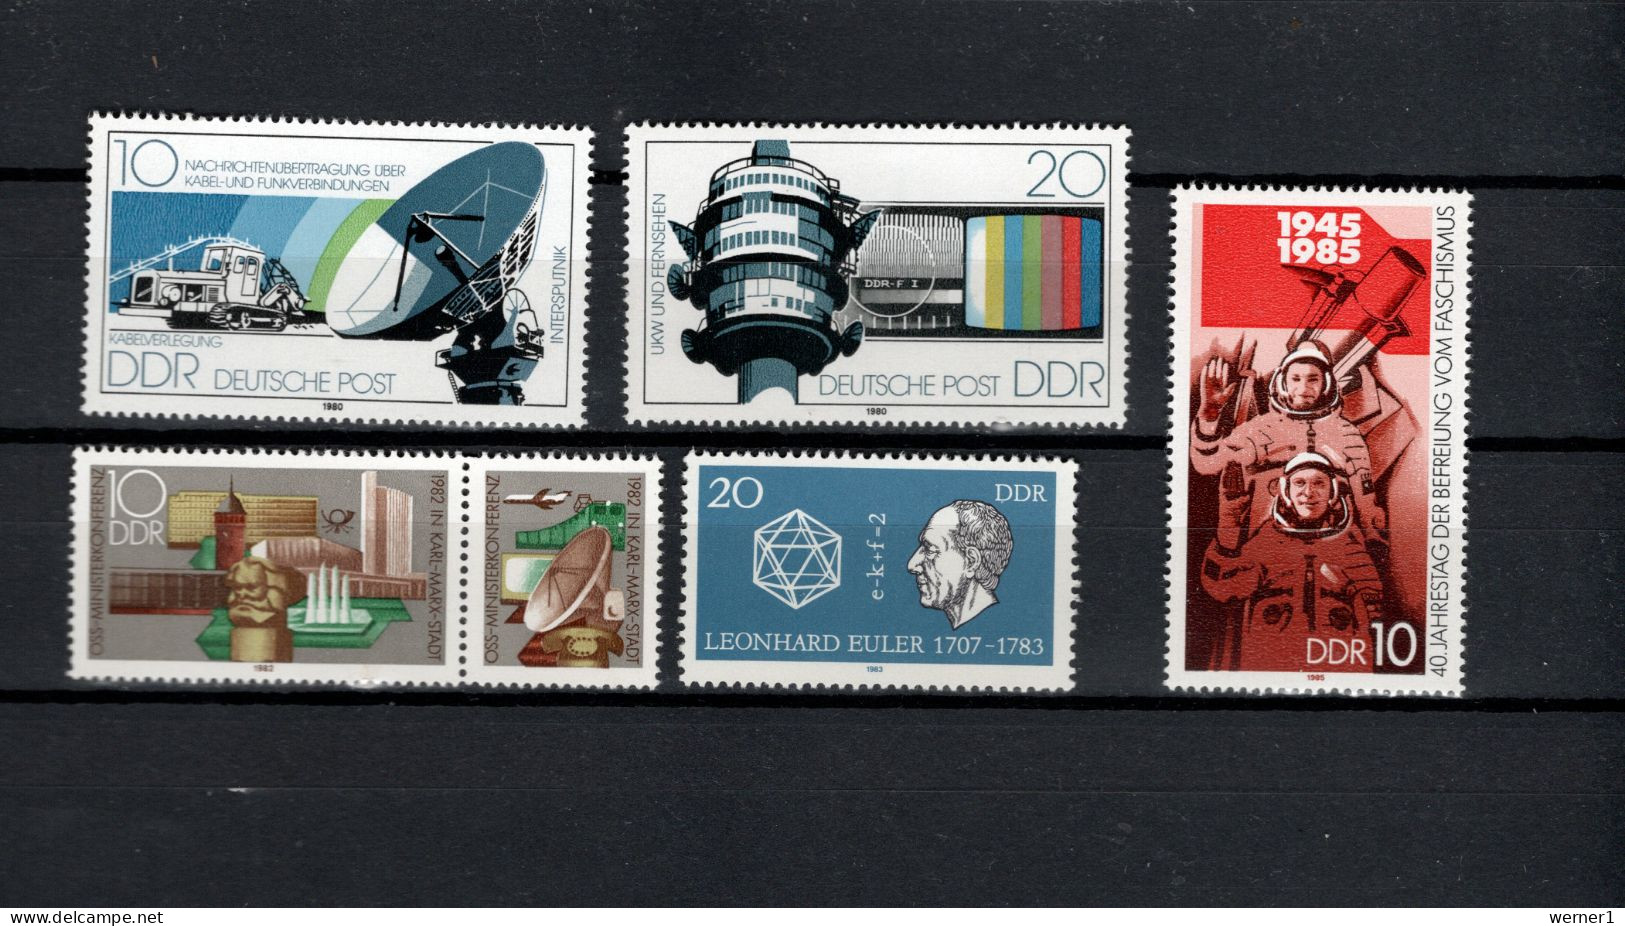 DDR 1980/1985 Space, Telecommunication, Euler, S. Jähn, 5 Stamps MNH - Europe